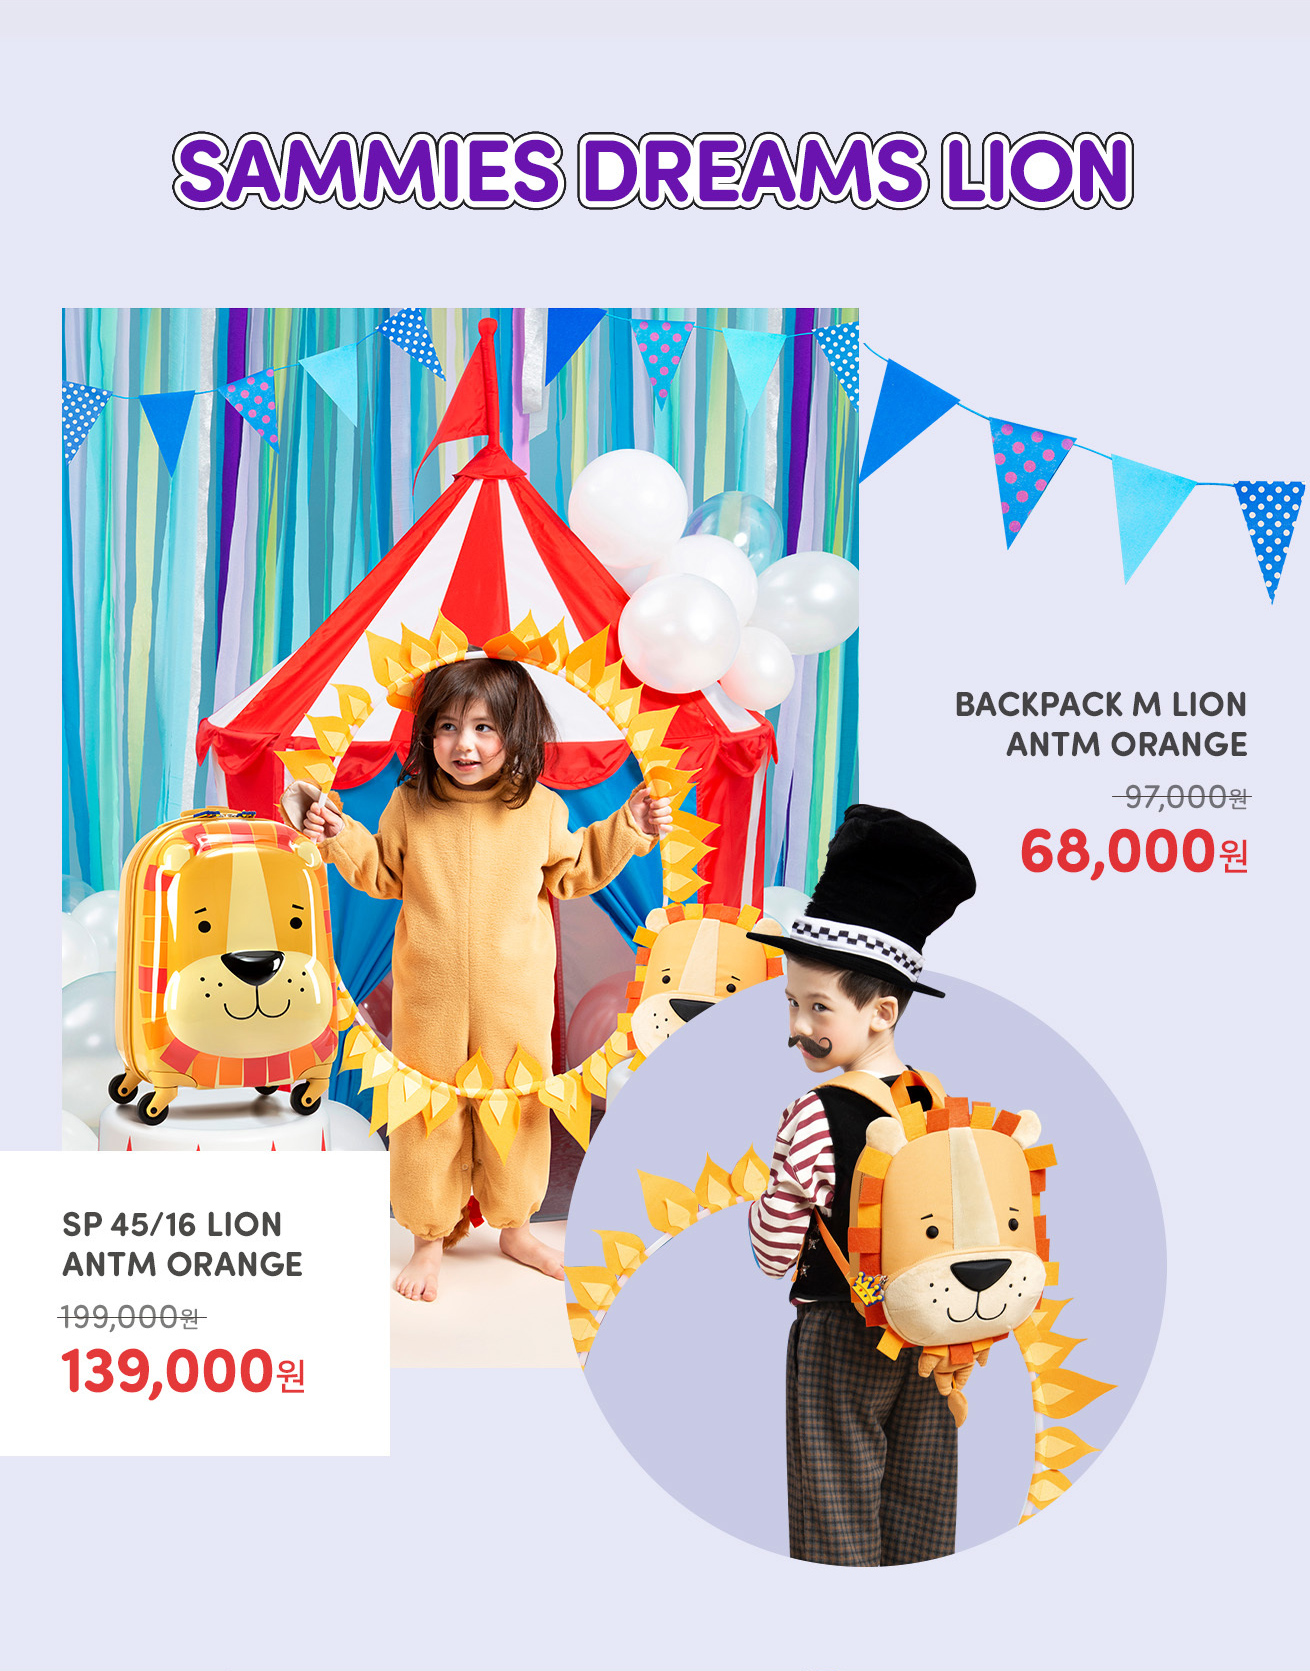 SAMMIES DREAMS LION SP 45/16 LION ANTM ORANGE 108,000원, BACKPACK LION ANTM ORANGE 58,000원